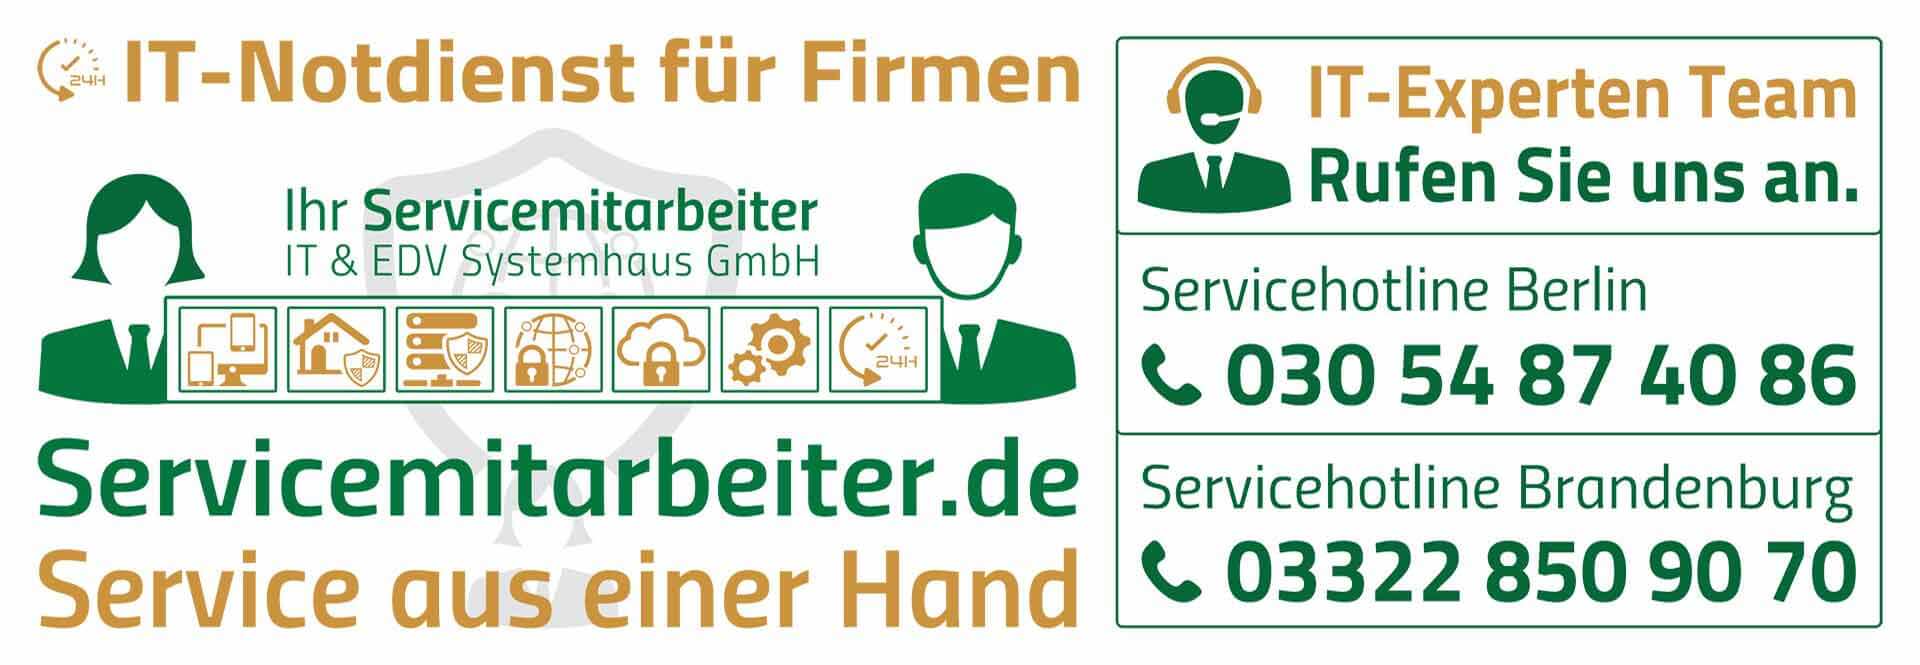 IT Support Berlin - Servicemitarbeiter - IT & EDV Systemhaus